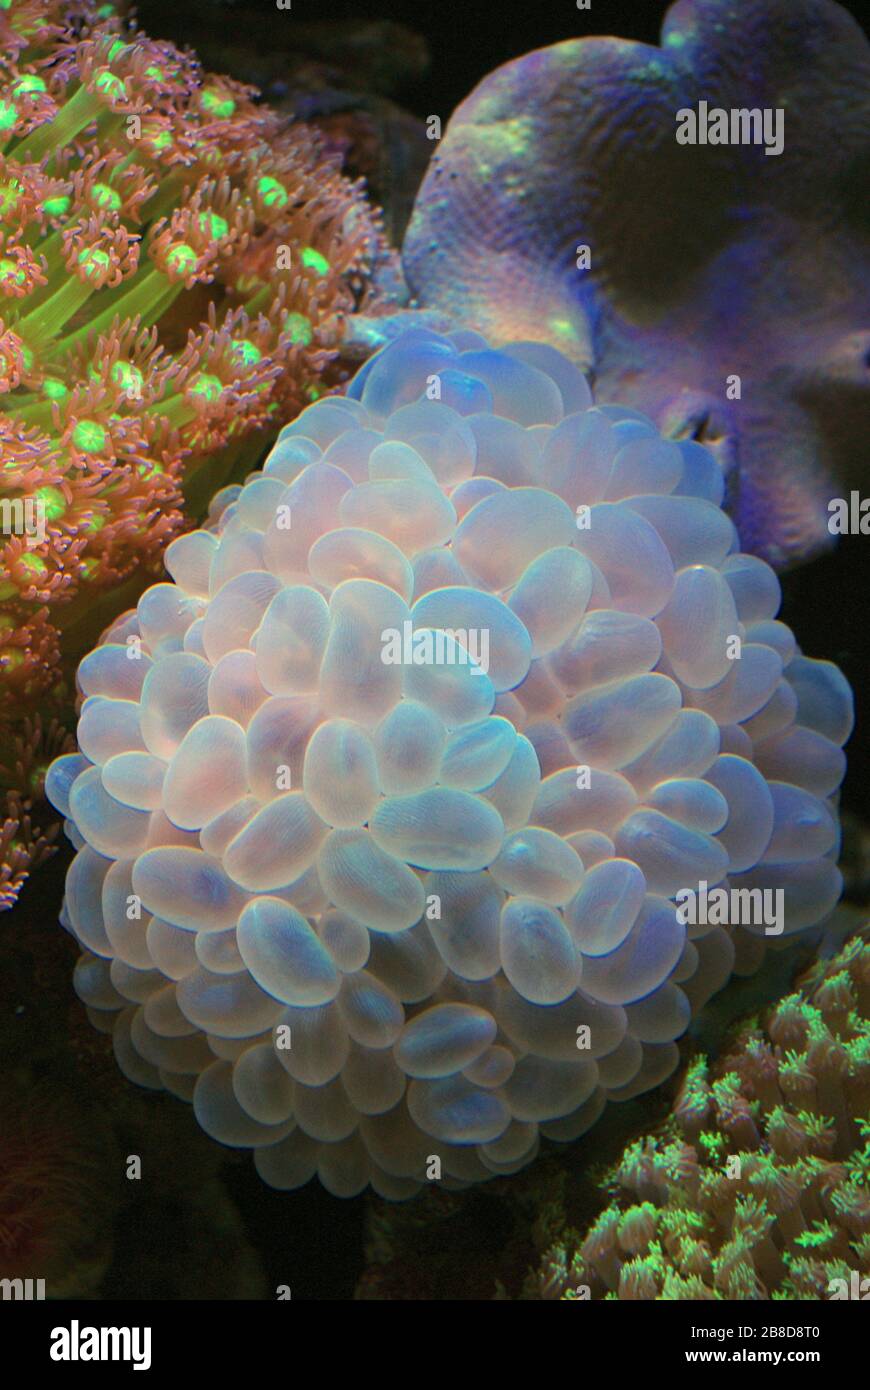 Bubble coral, Plerogyra sinuosa Stock Photo